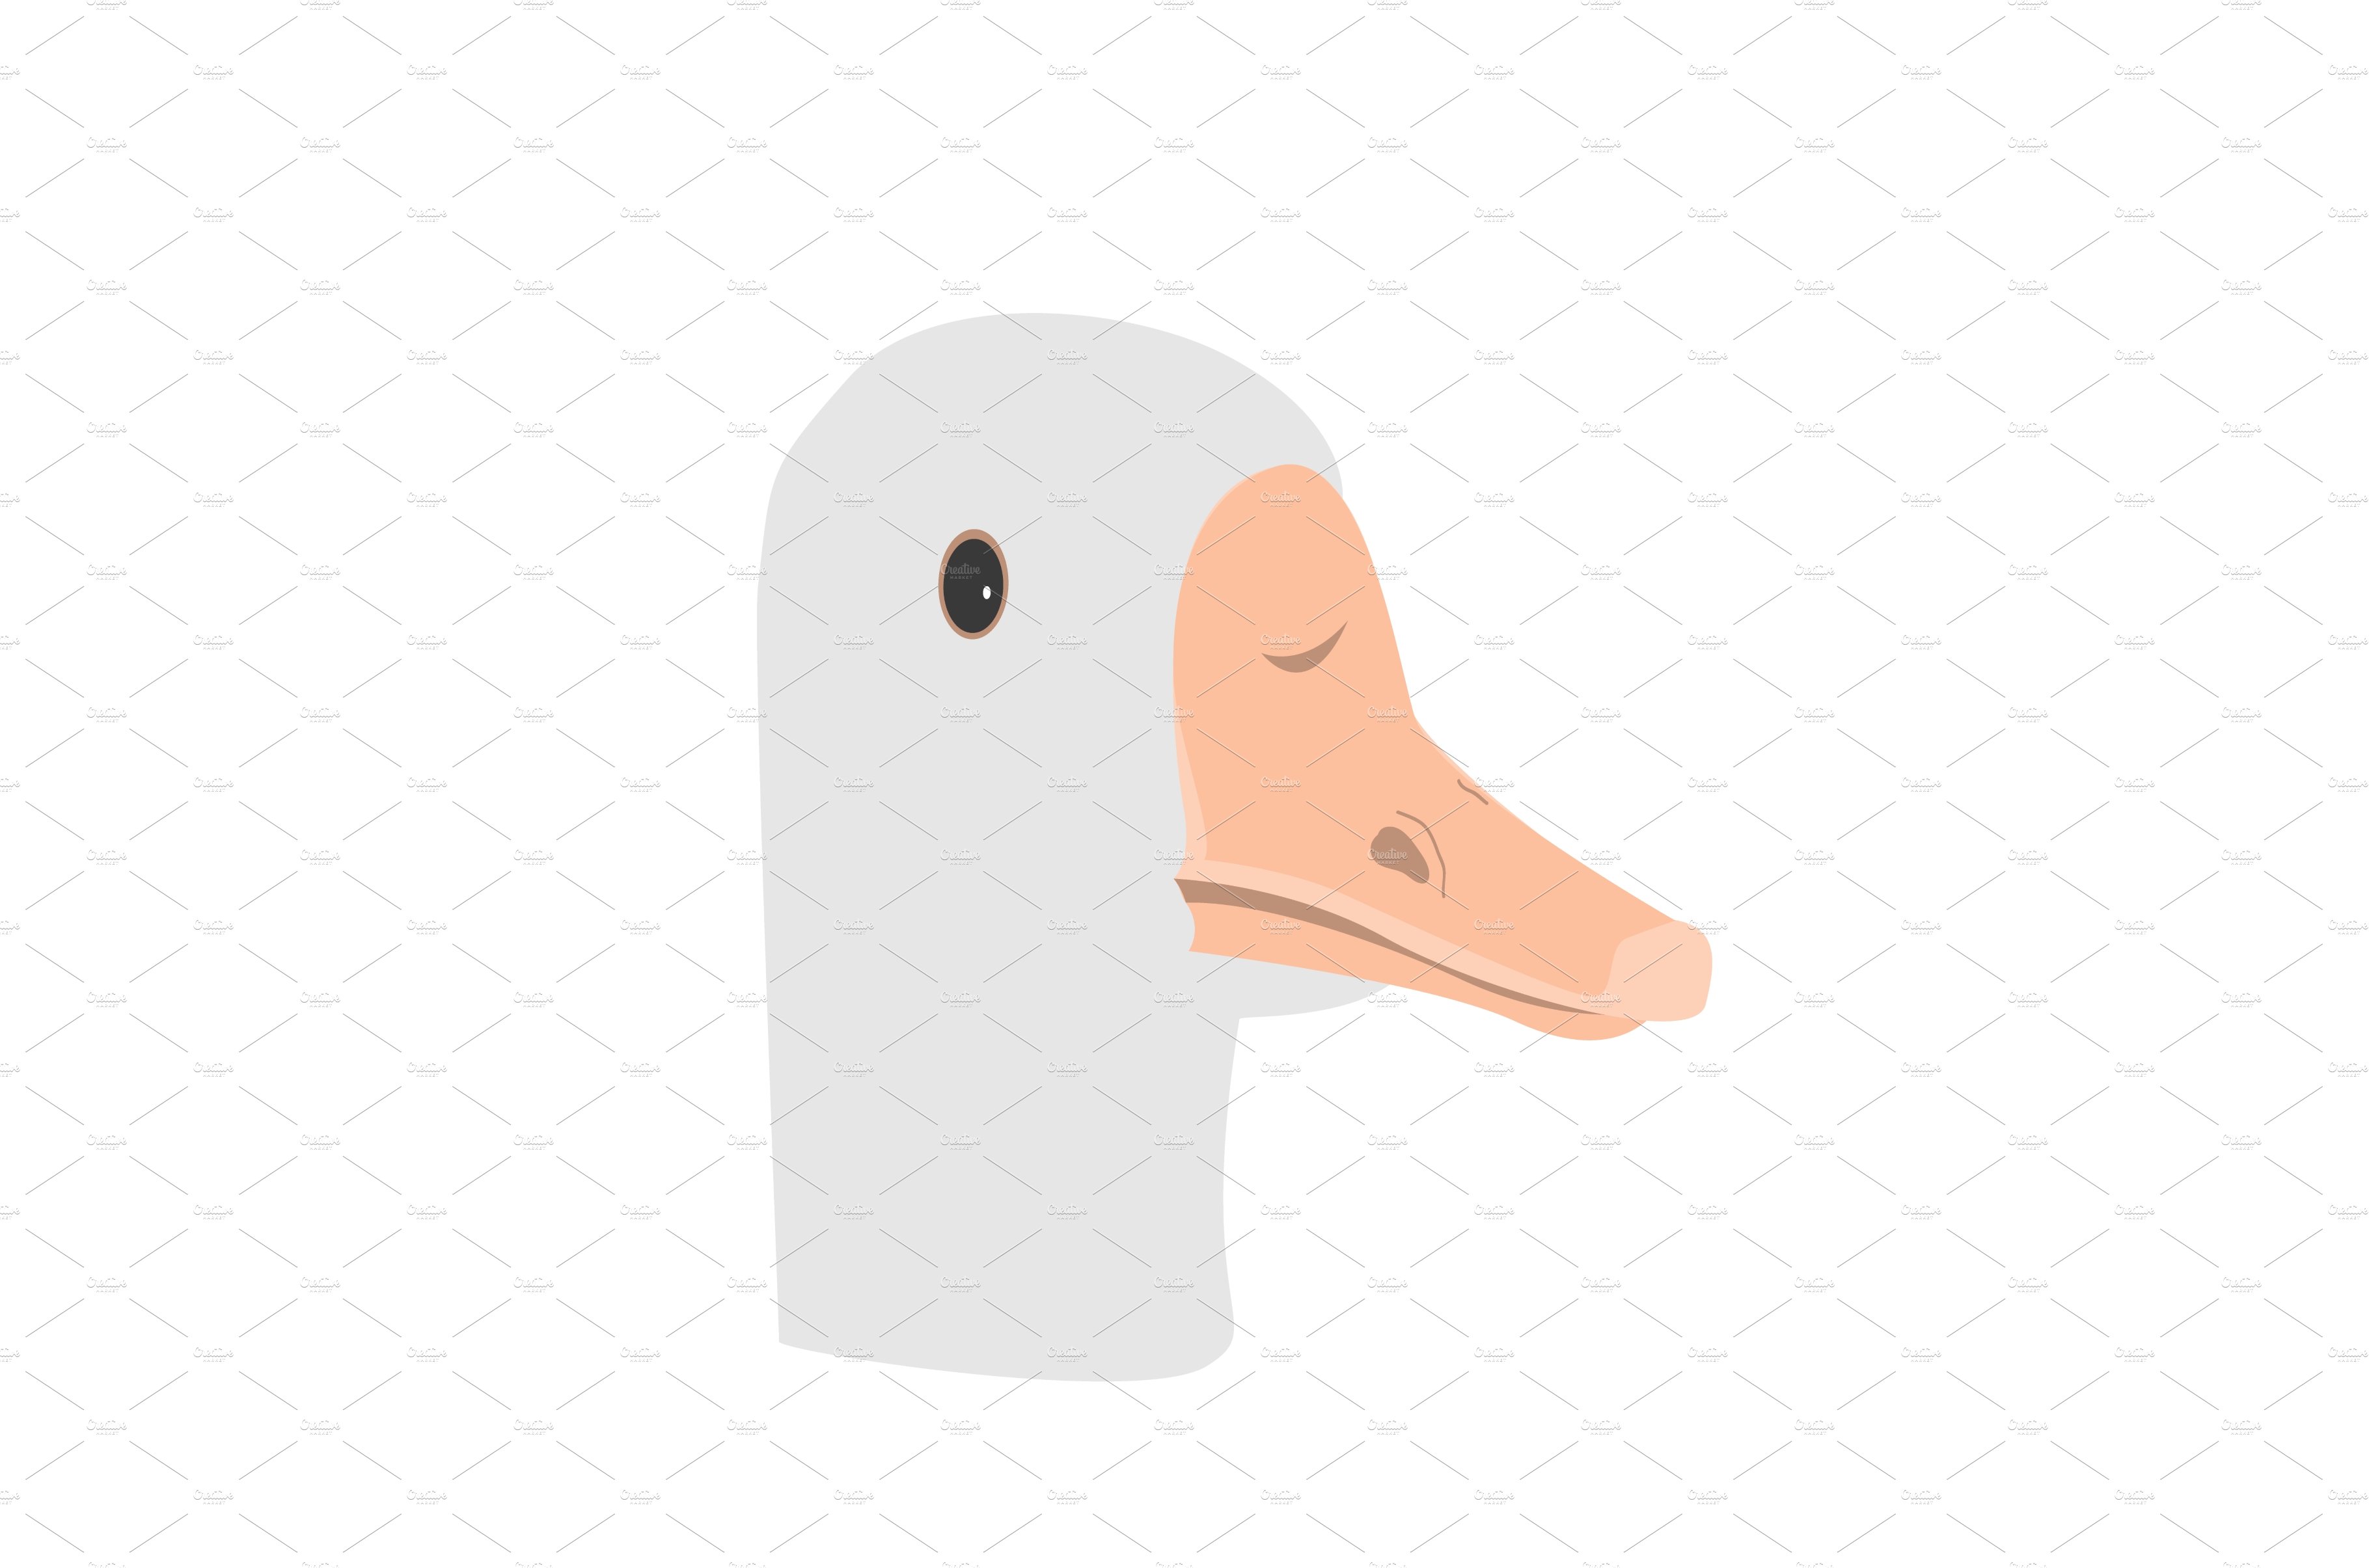 Goose head cartoon vector cover image.